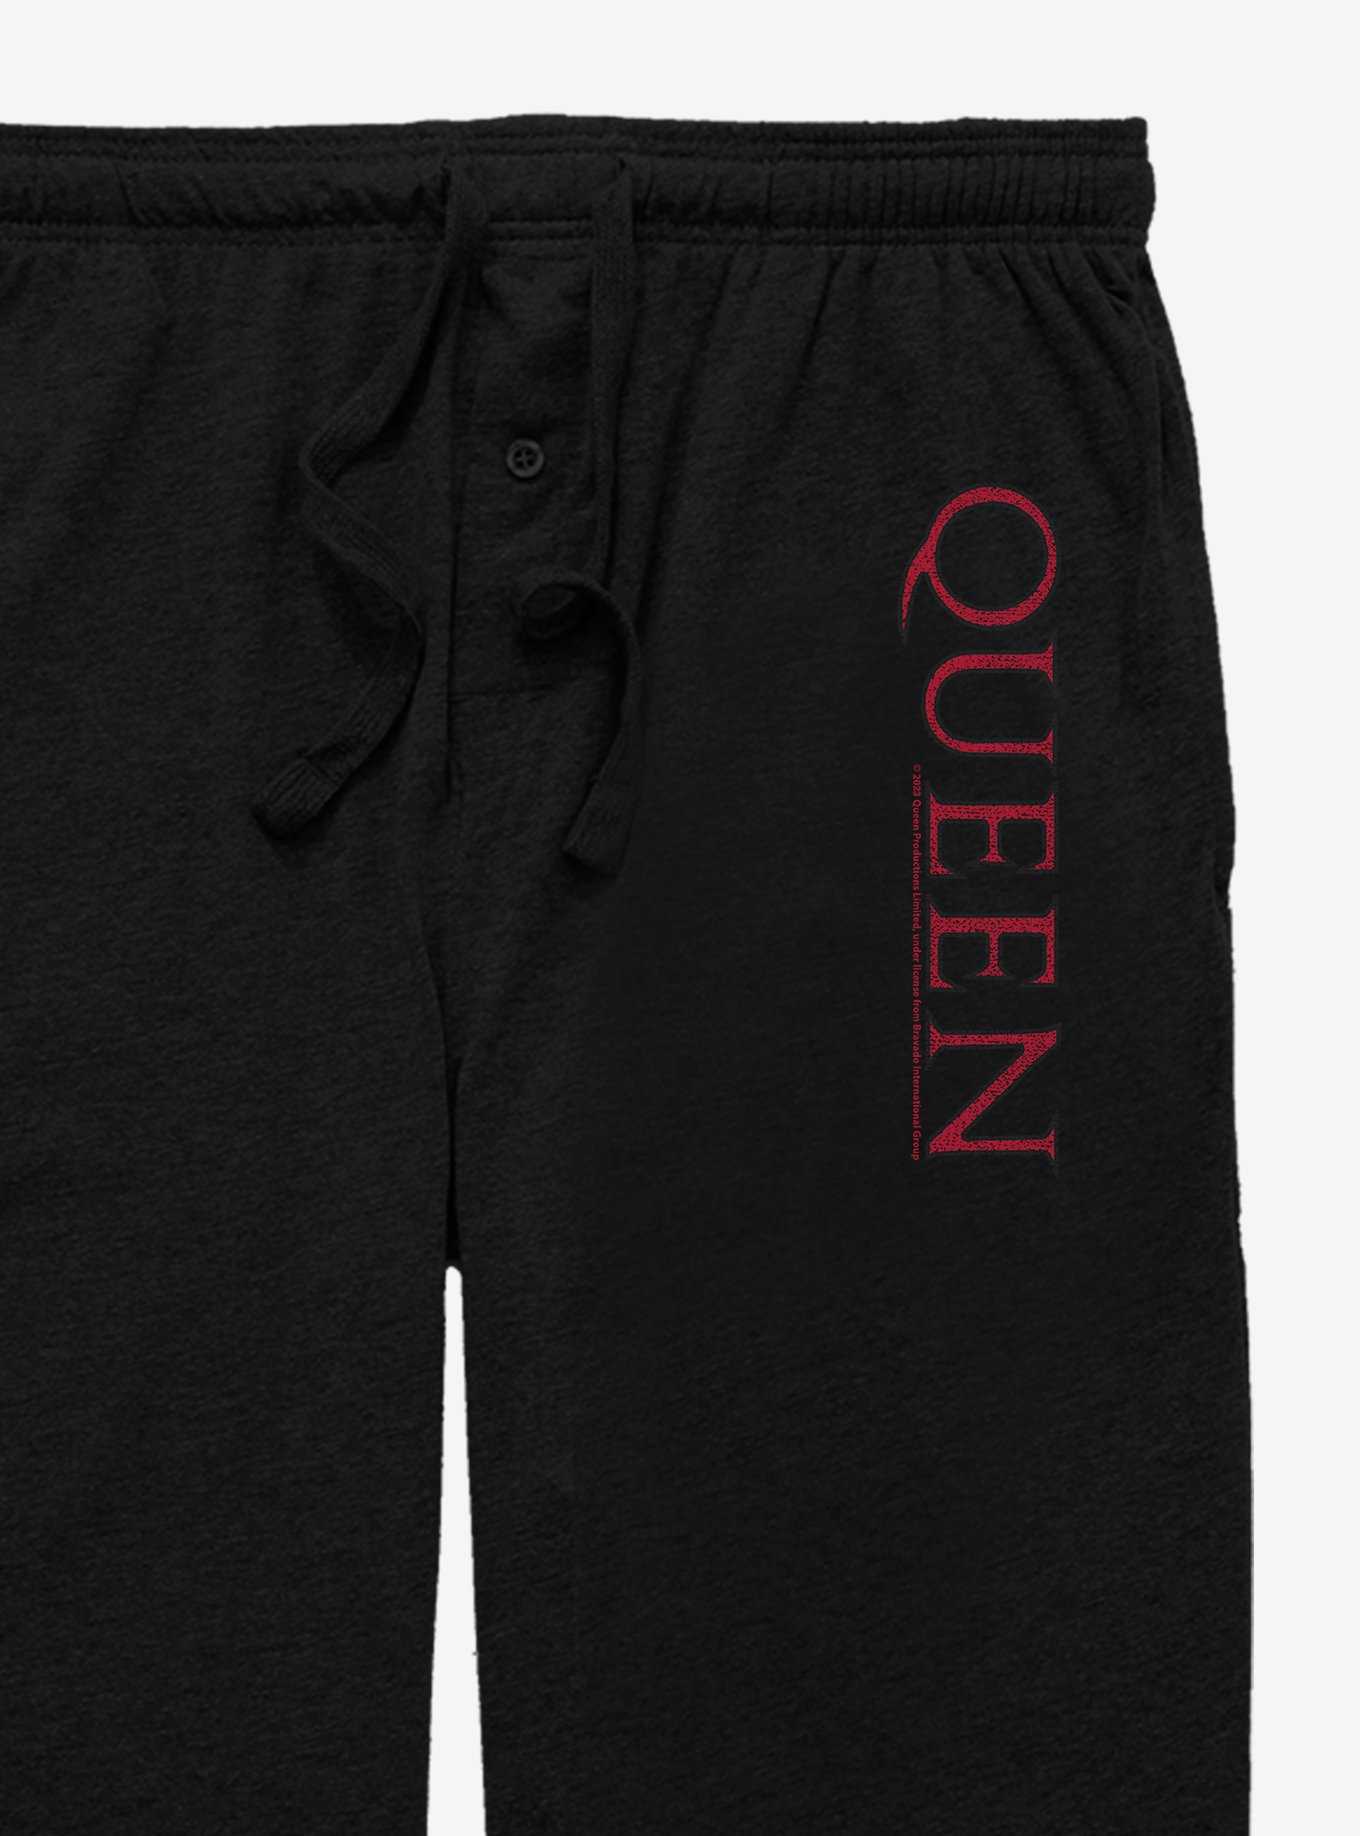 Queen Band Logo Pajama Pants, , hi-res